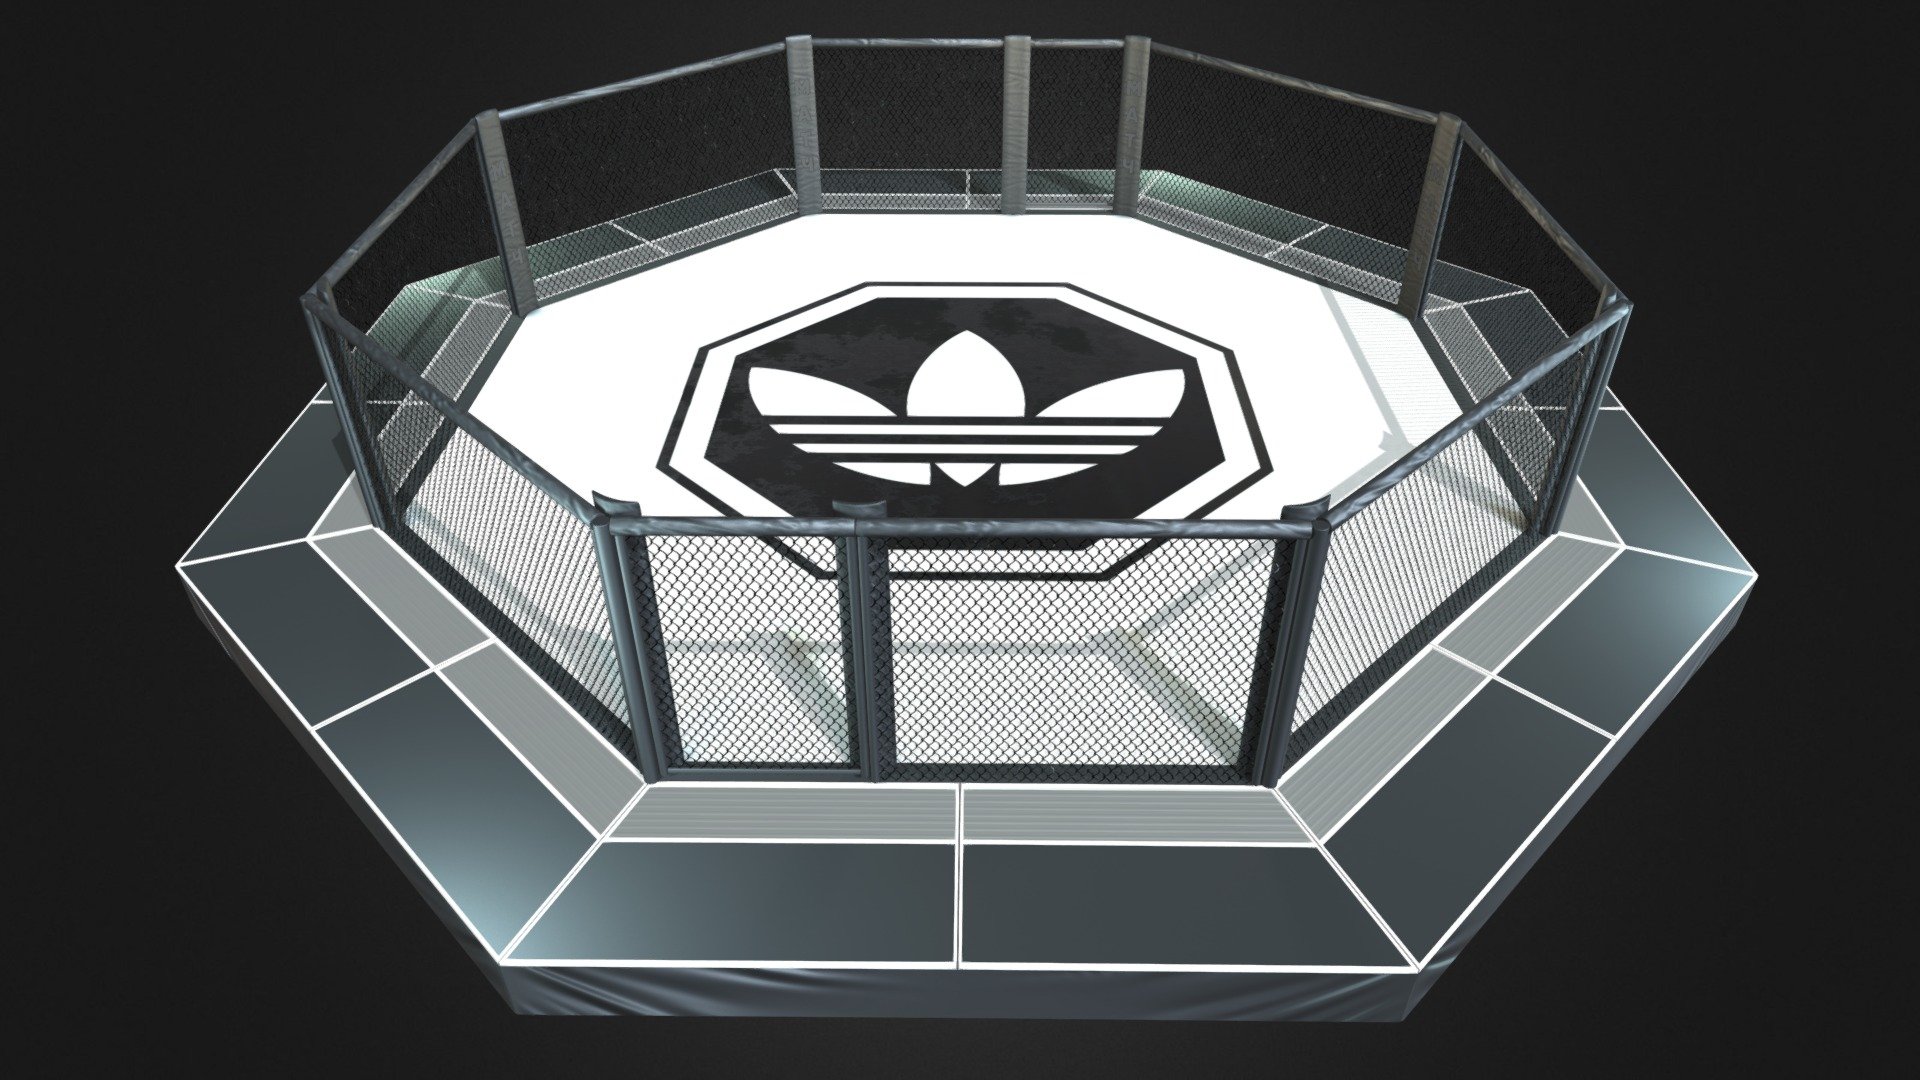 Octagon UFC
https://www.vk.com/korneyn - Octagon UFC - 3D model by Korneev Nikita Kirillovich (@nikitakorneev89) 3d model